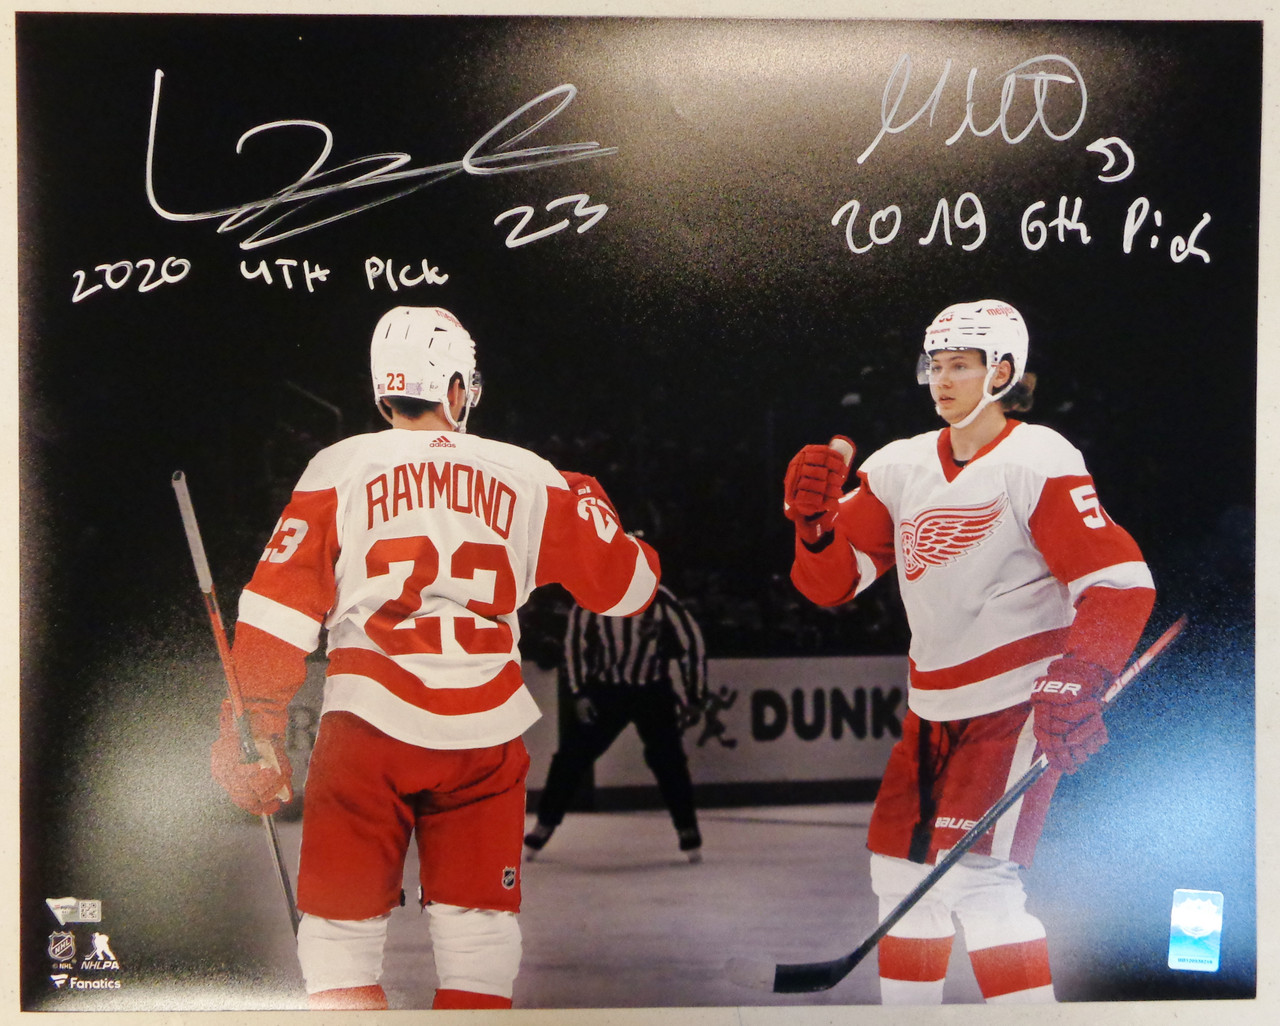 Lucas Raymond Autographed Signed Full-Size Hockey Stick Detroit